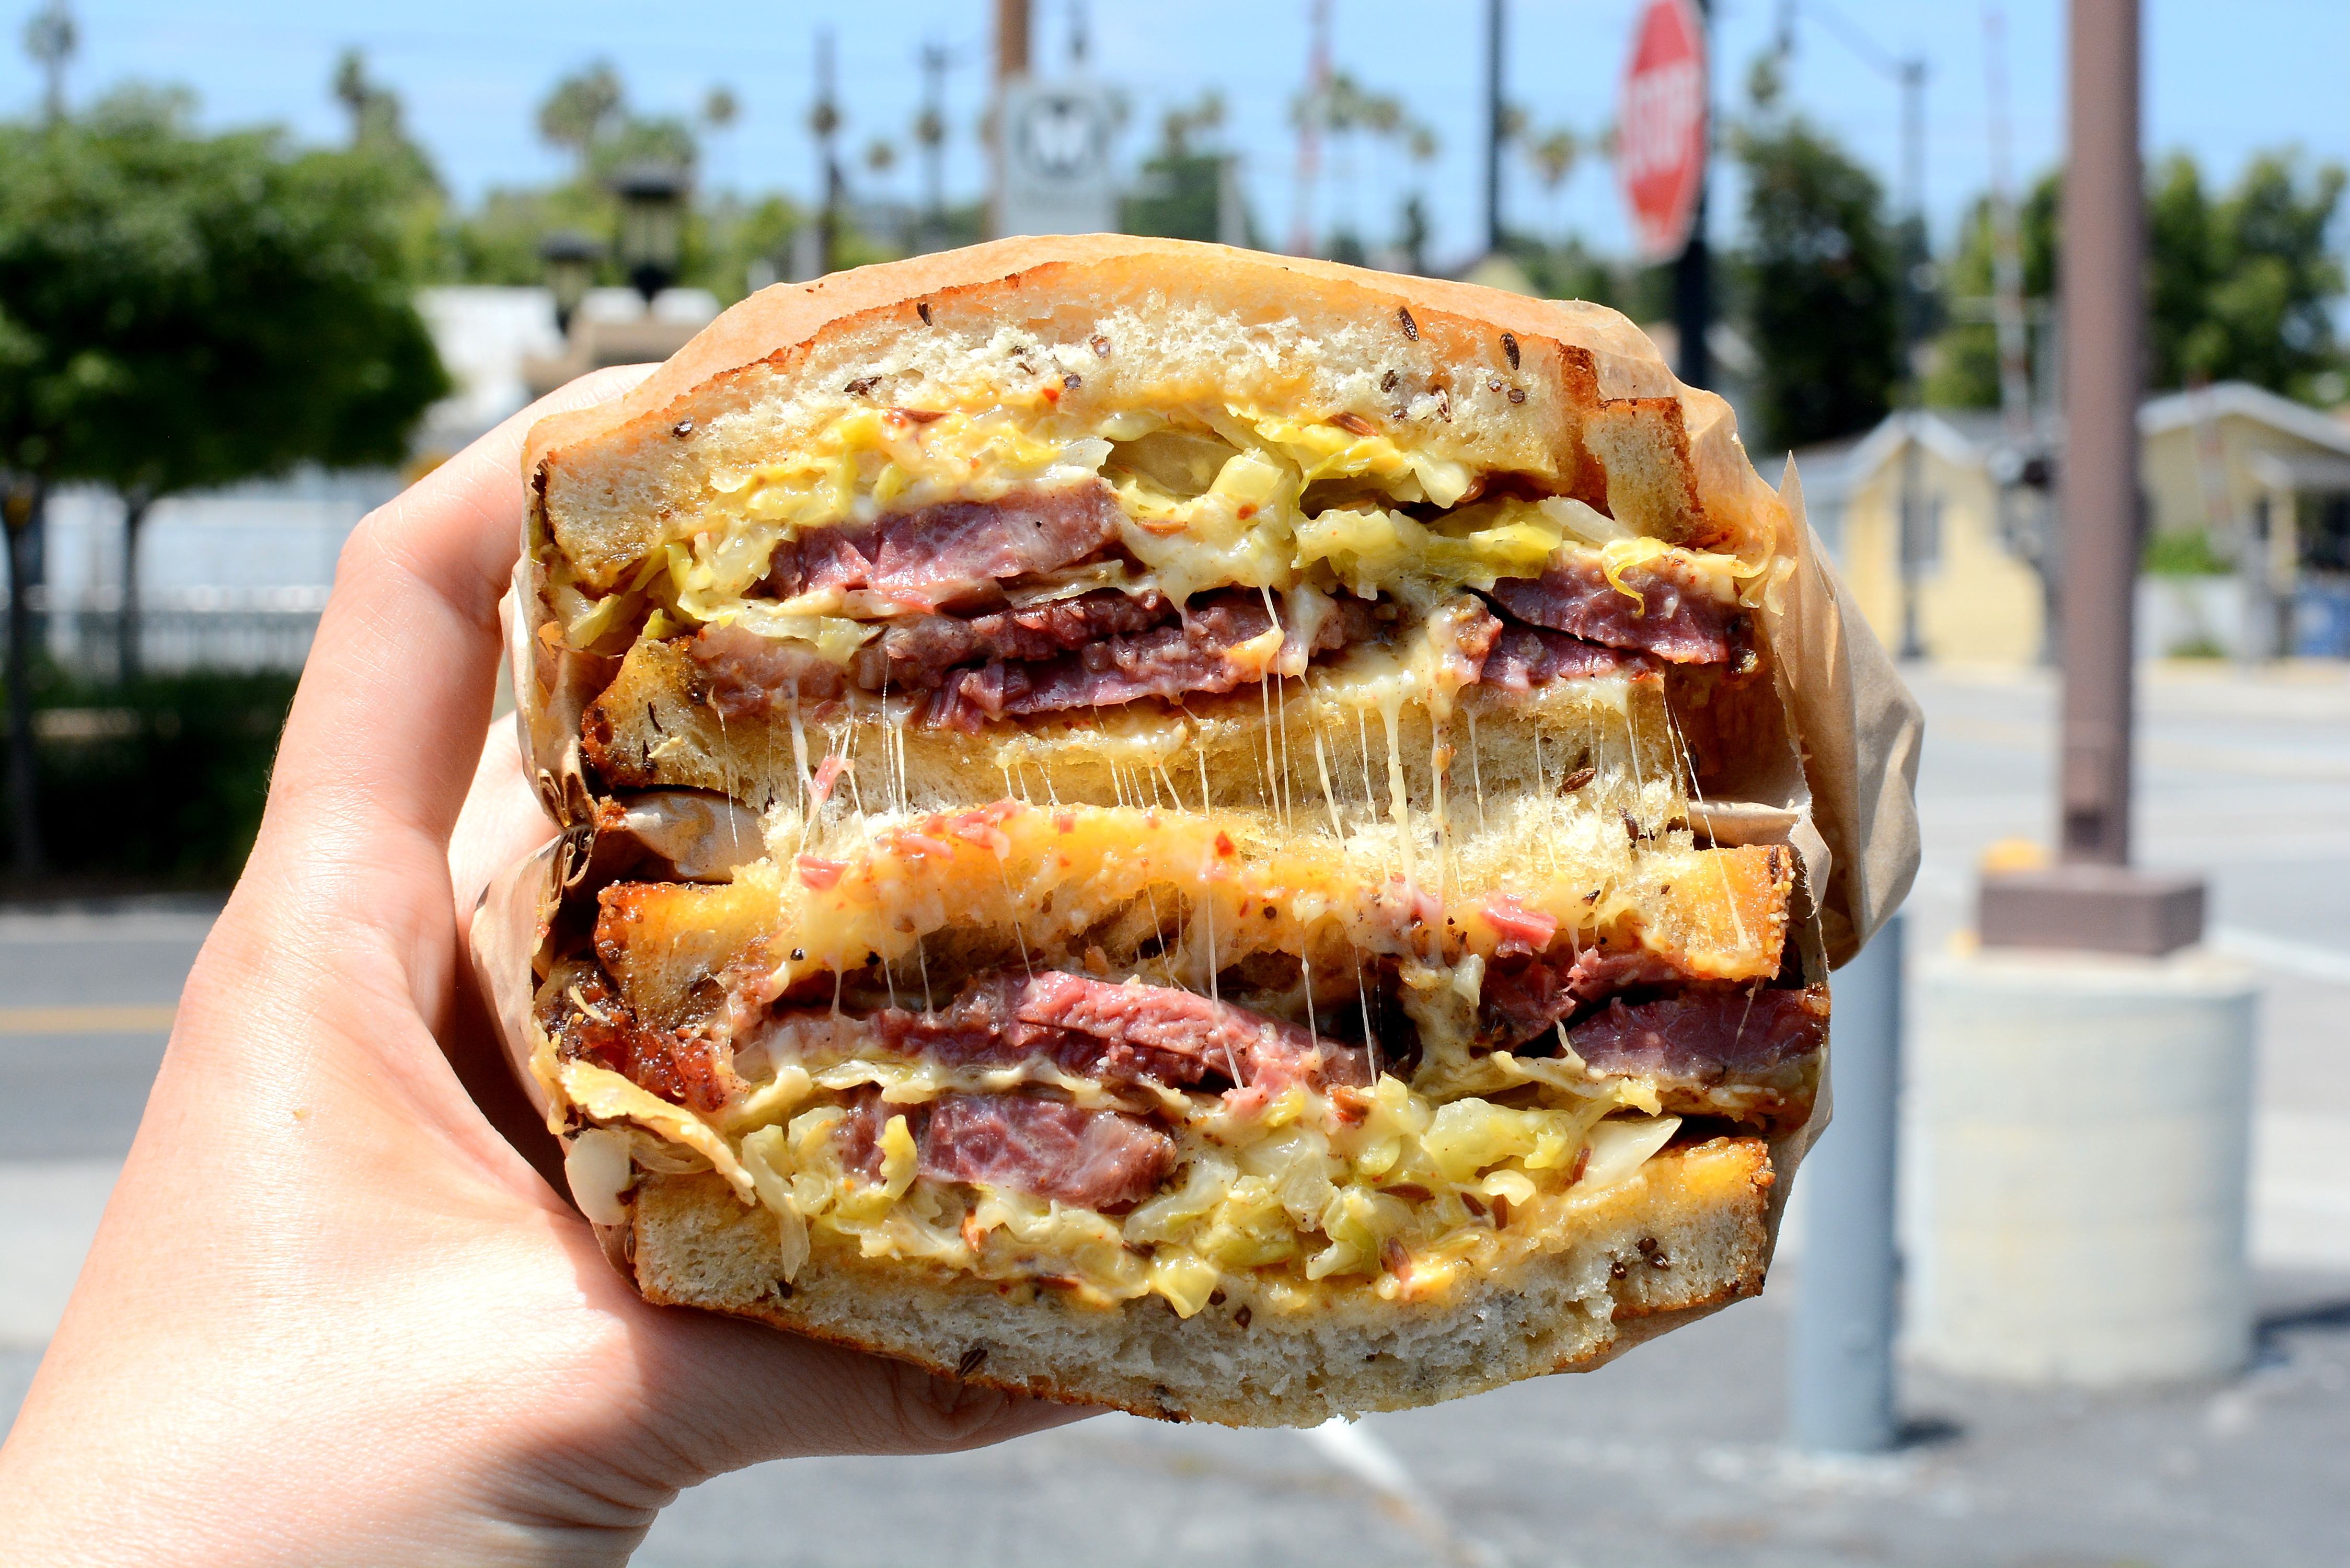 Reuben sandwich from Jeff’s Table.